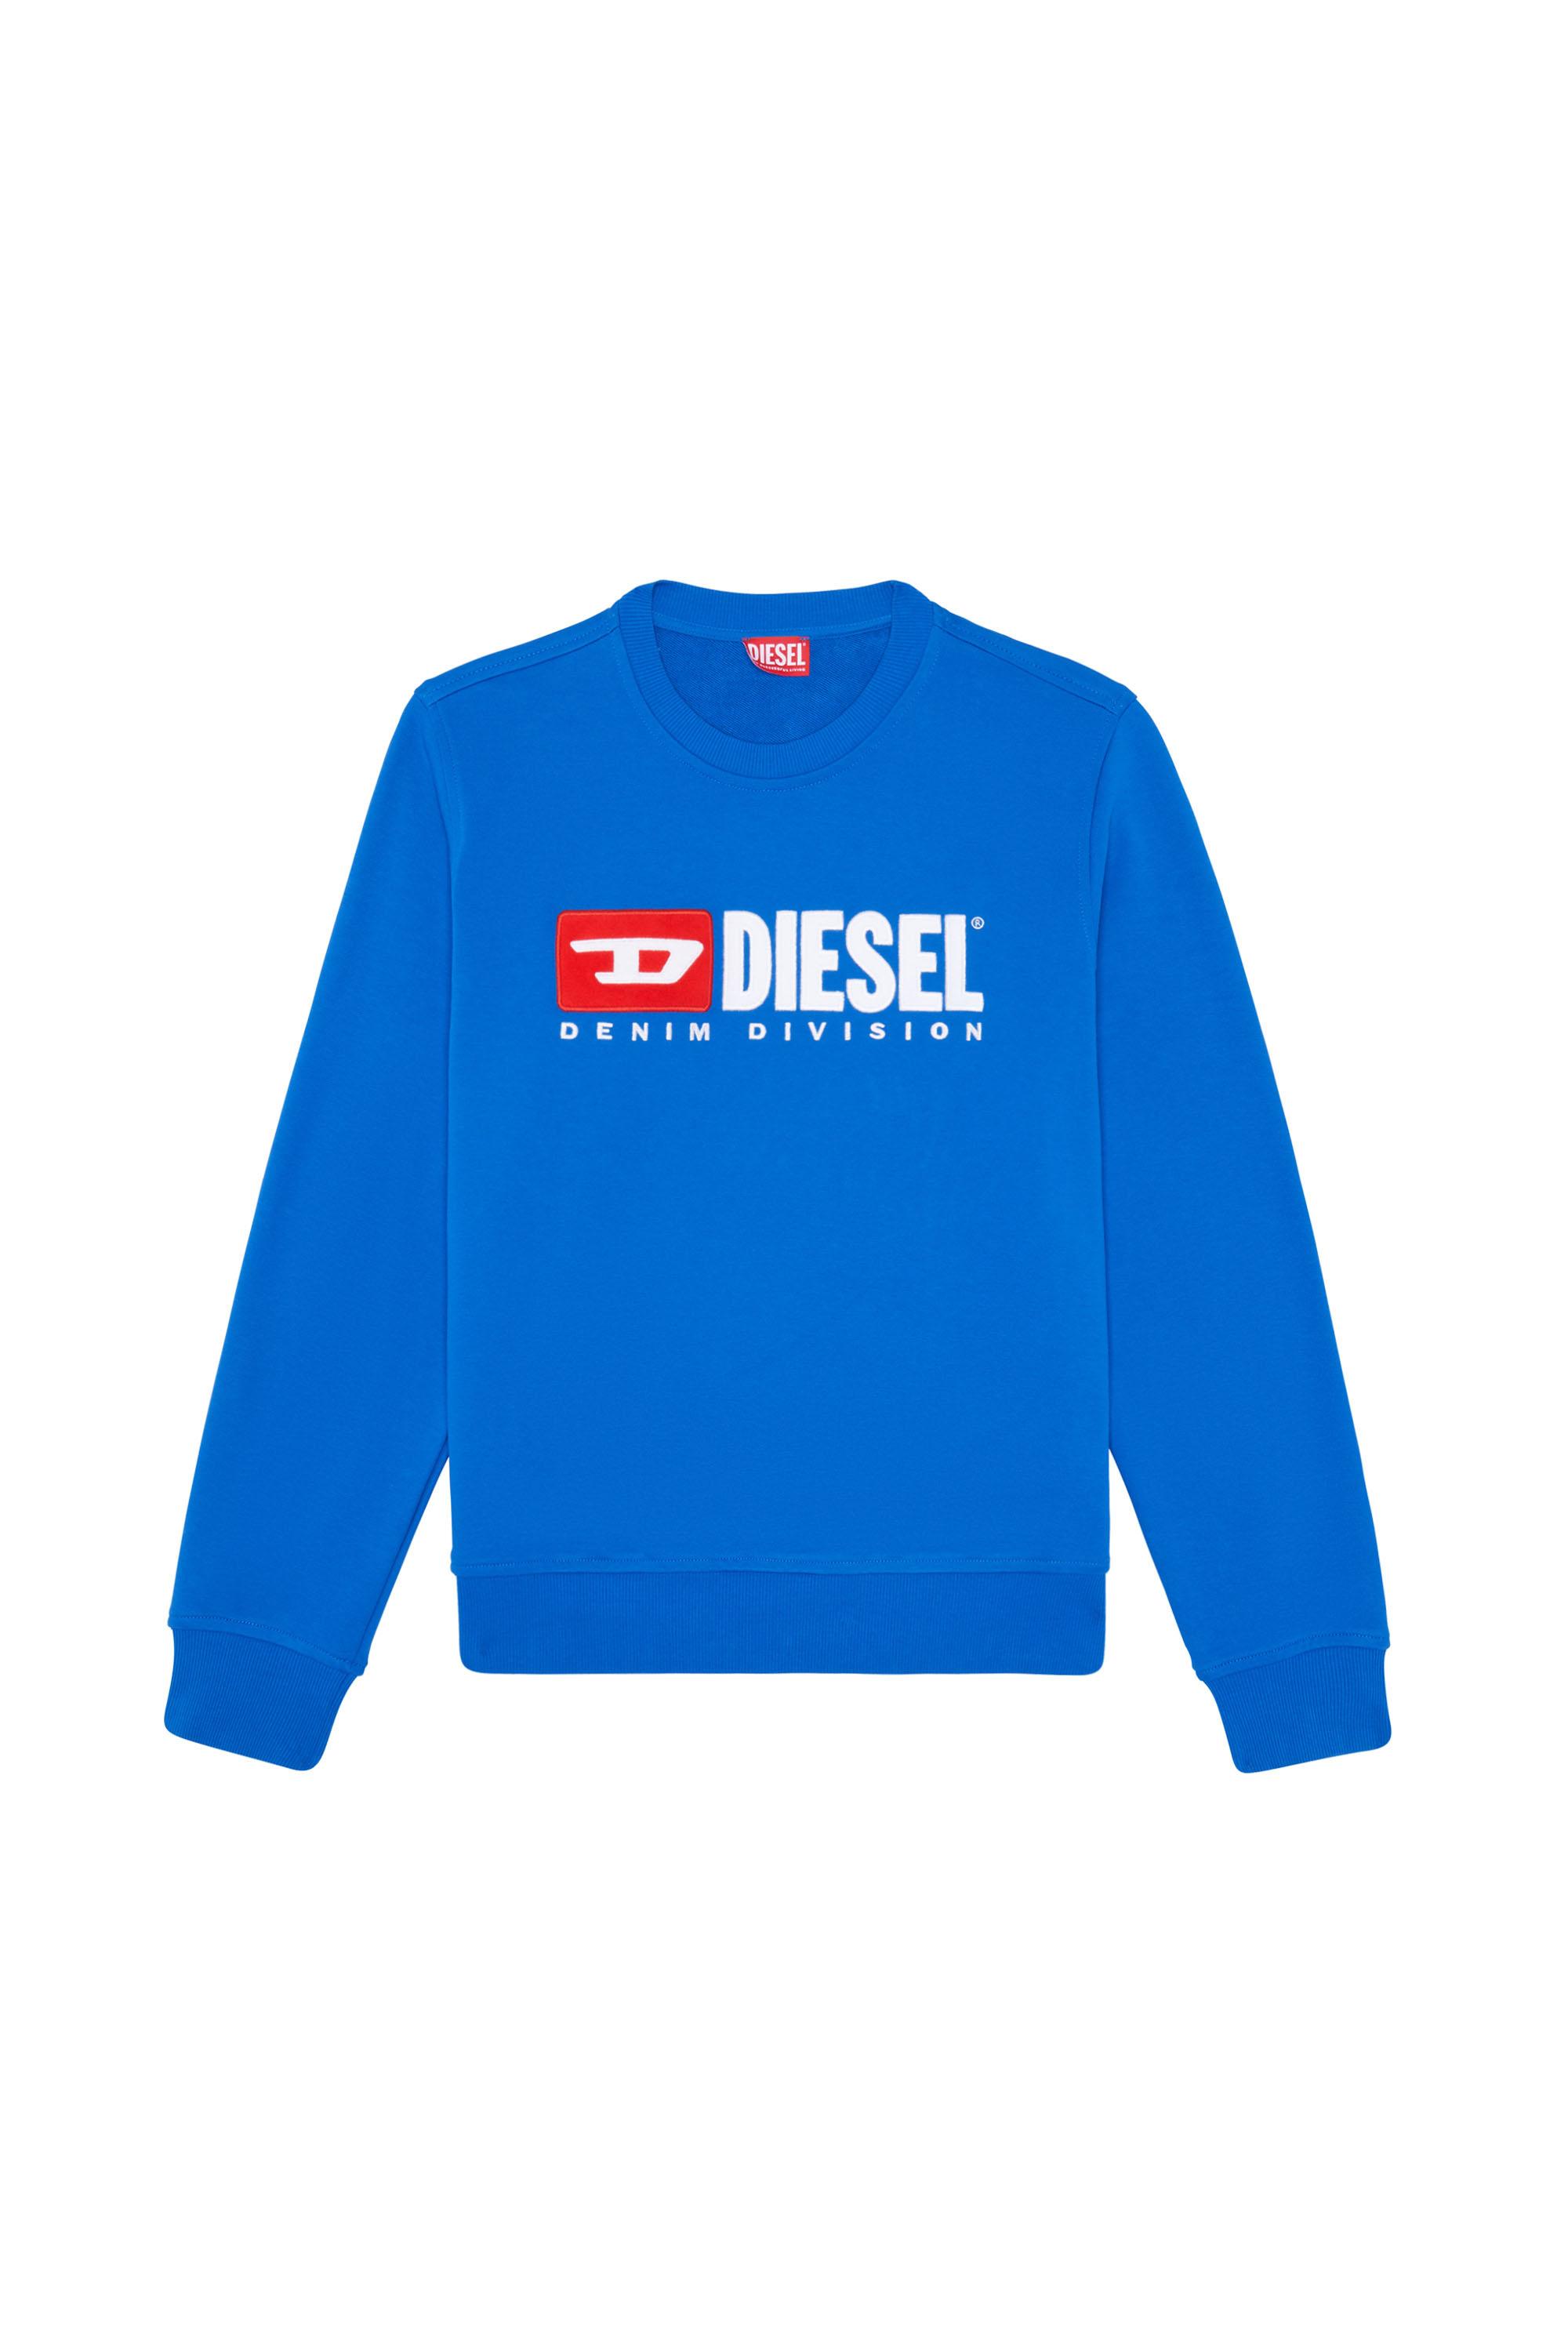 Diesel - S-GINN-DIV, Azul - Image 2